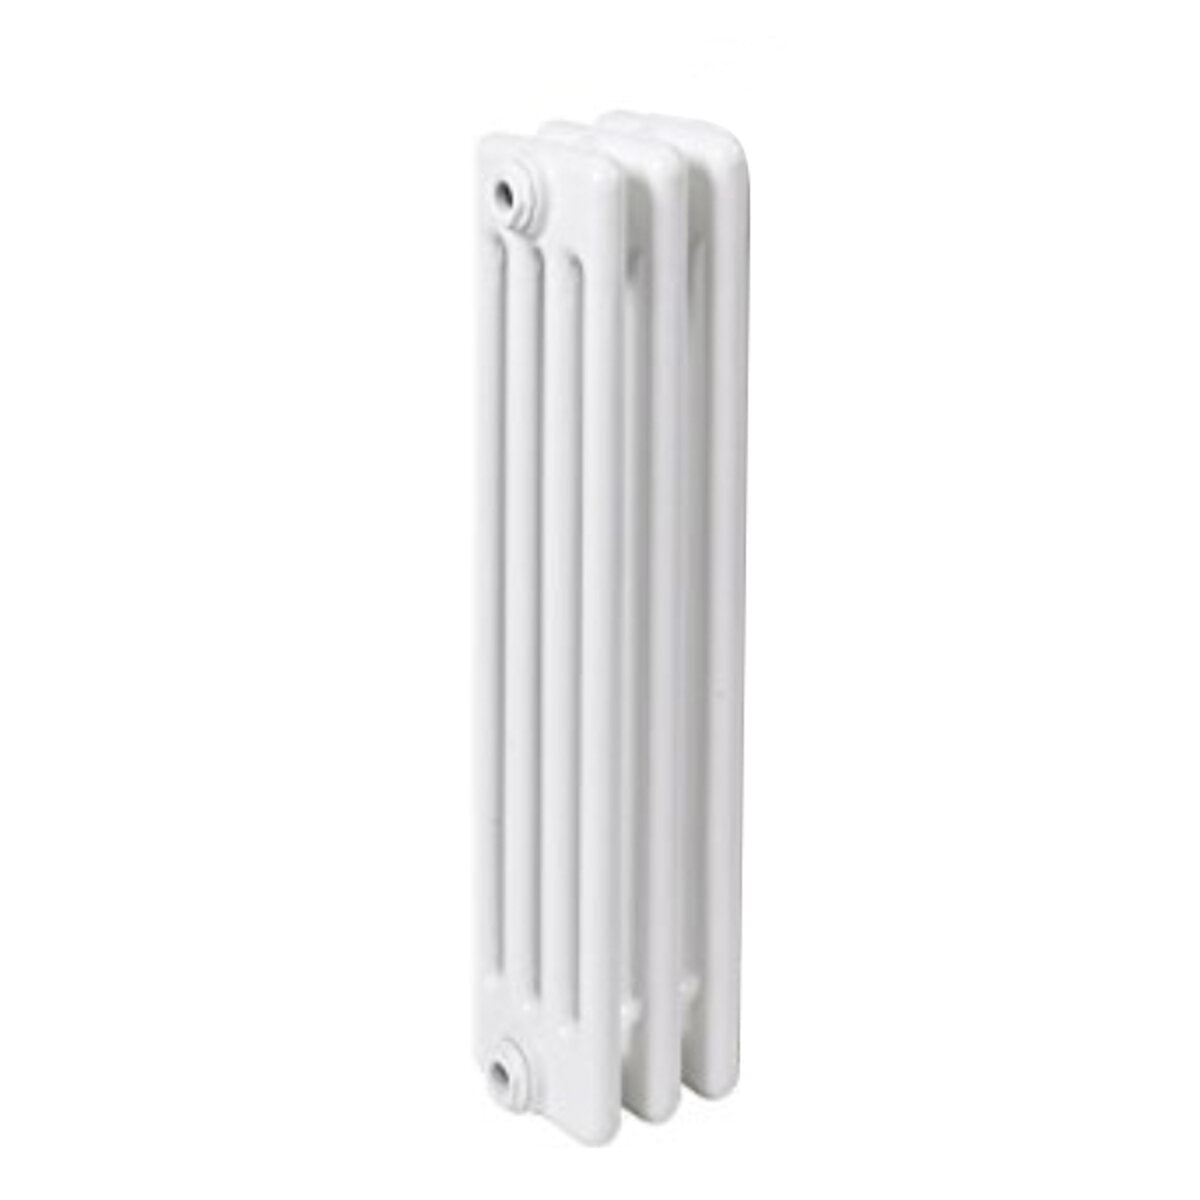 Ercos Comby steel column radiator 3 elements 4 columns center distance 600 mm